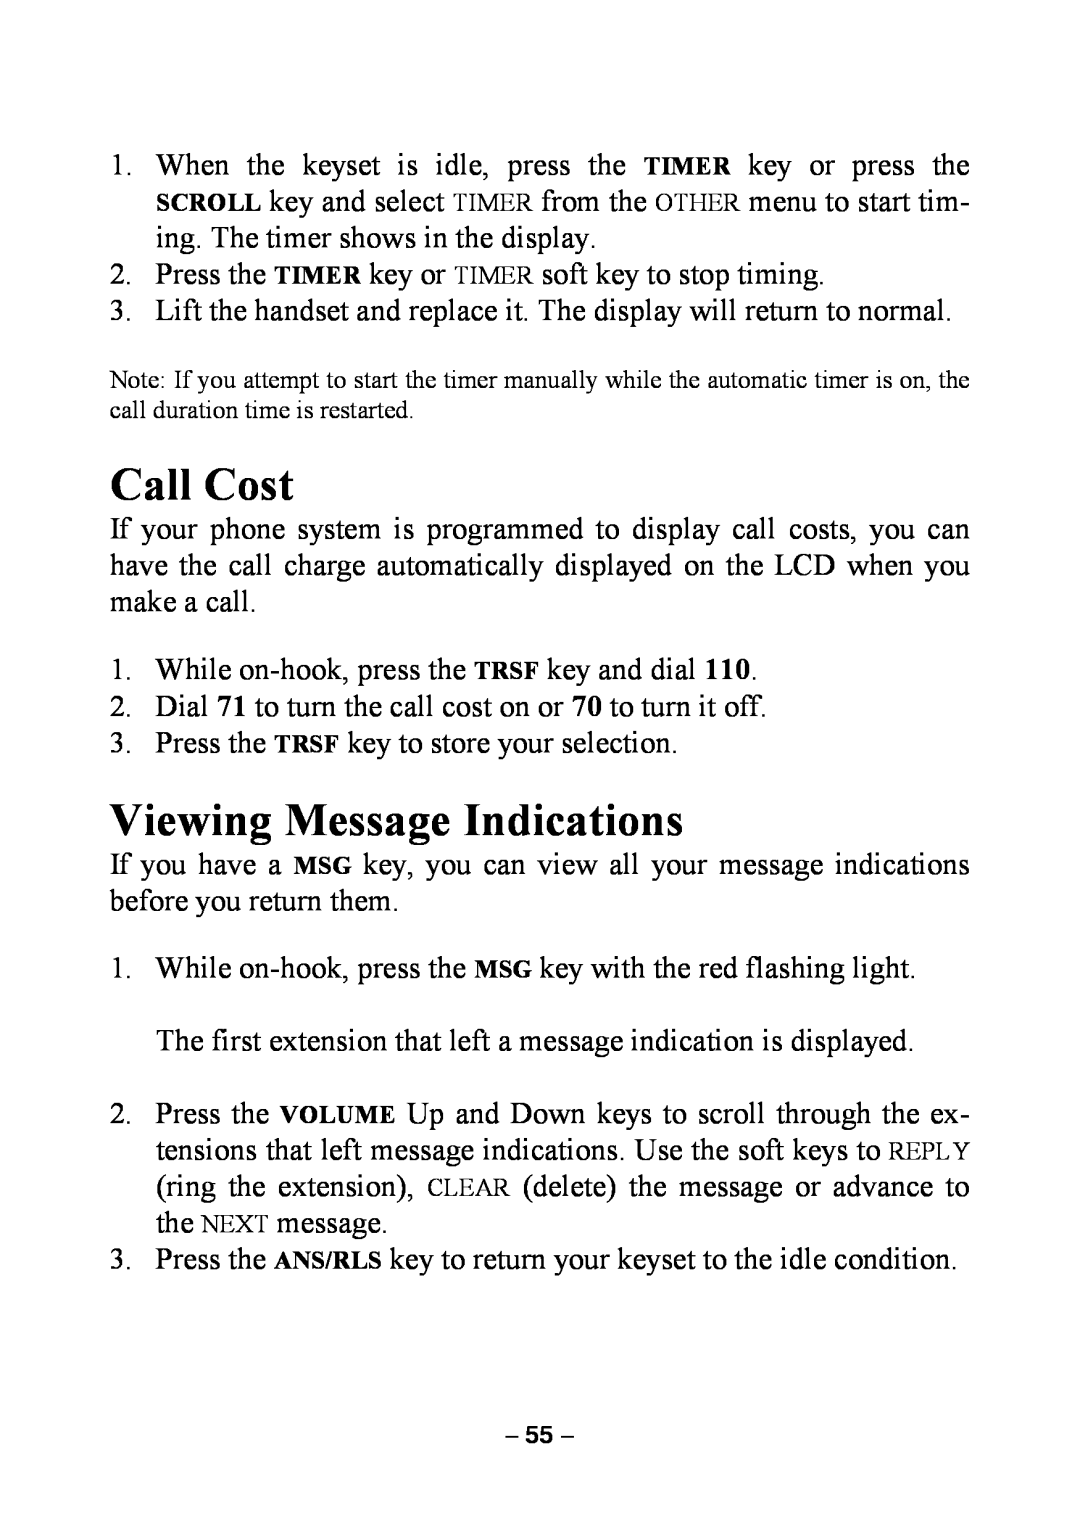 Samsung DCS KEYSET manual Call Cost, Viewing Message Indications 